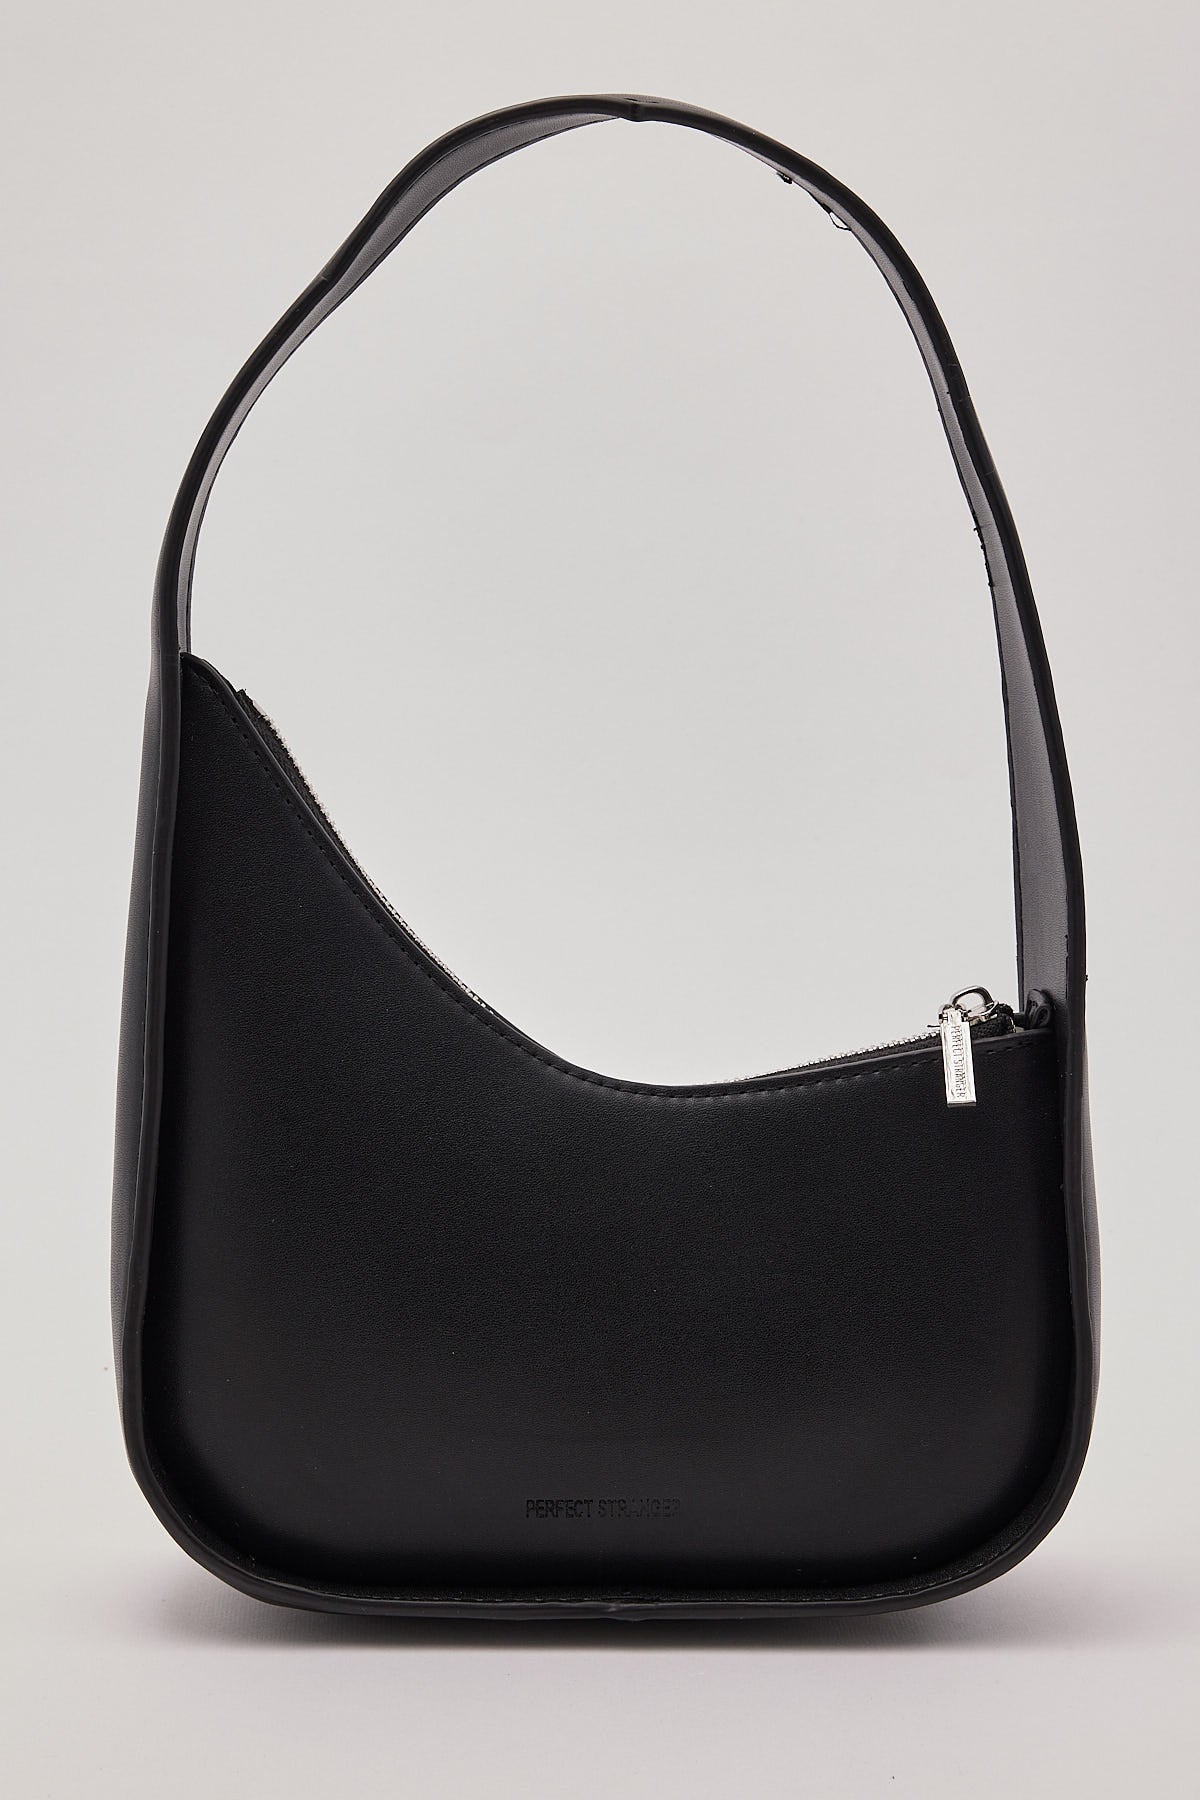 Perfect Stranger Amara Assymetrical Handbag Black